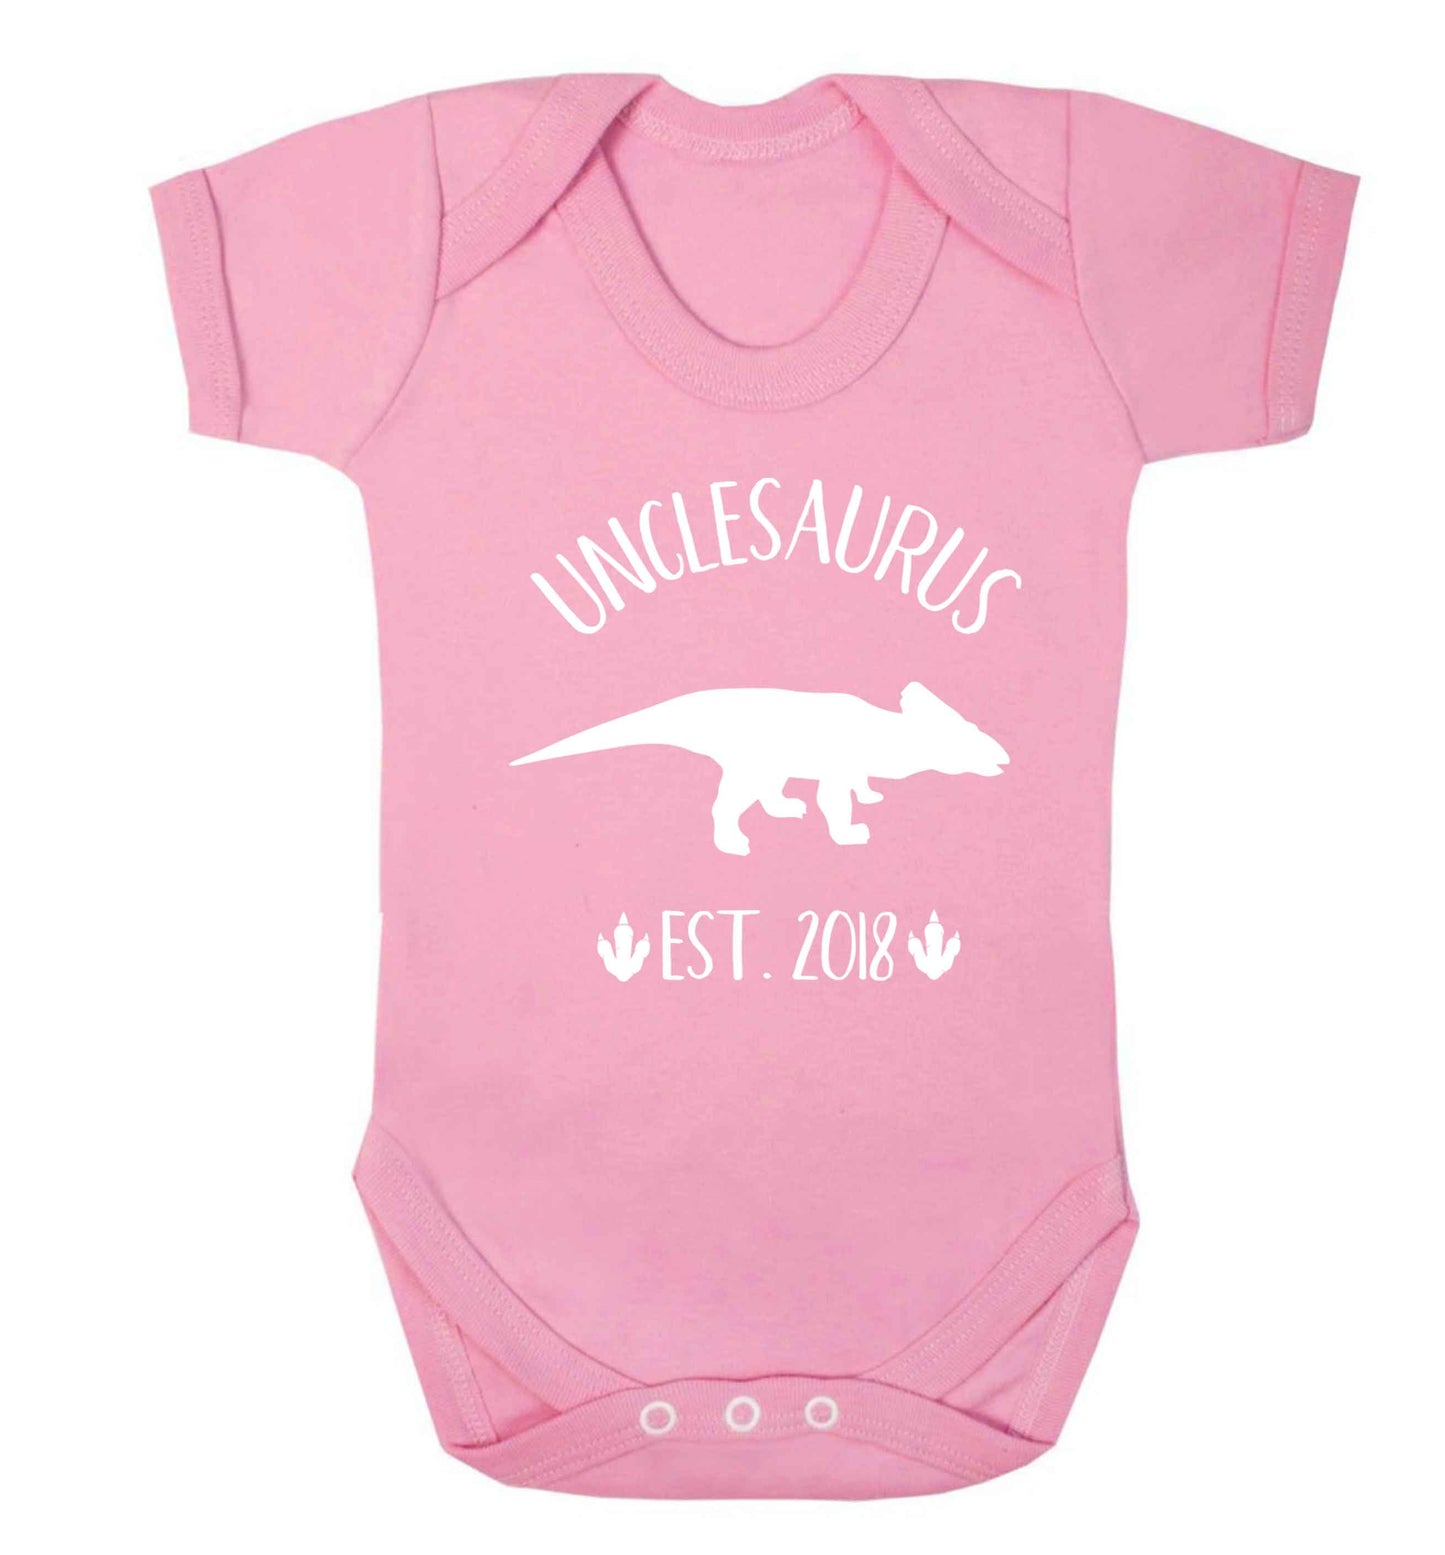 Personalised unclesaurus since (custom date) Baby Vest pale pink 18-24 months